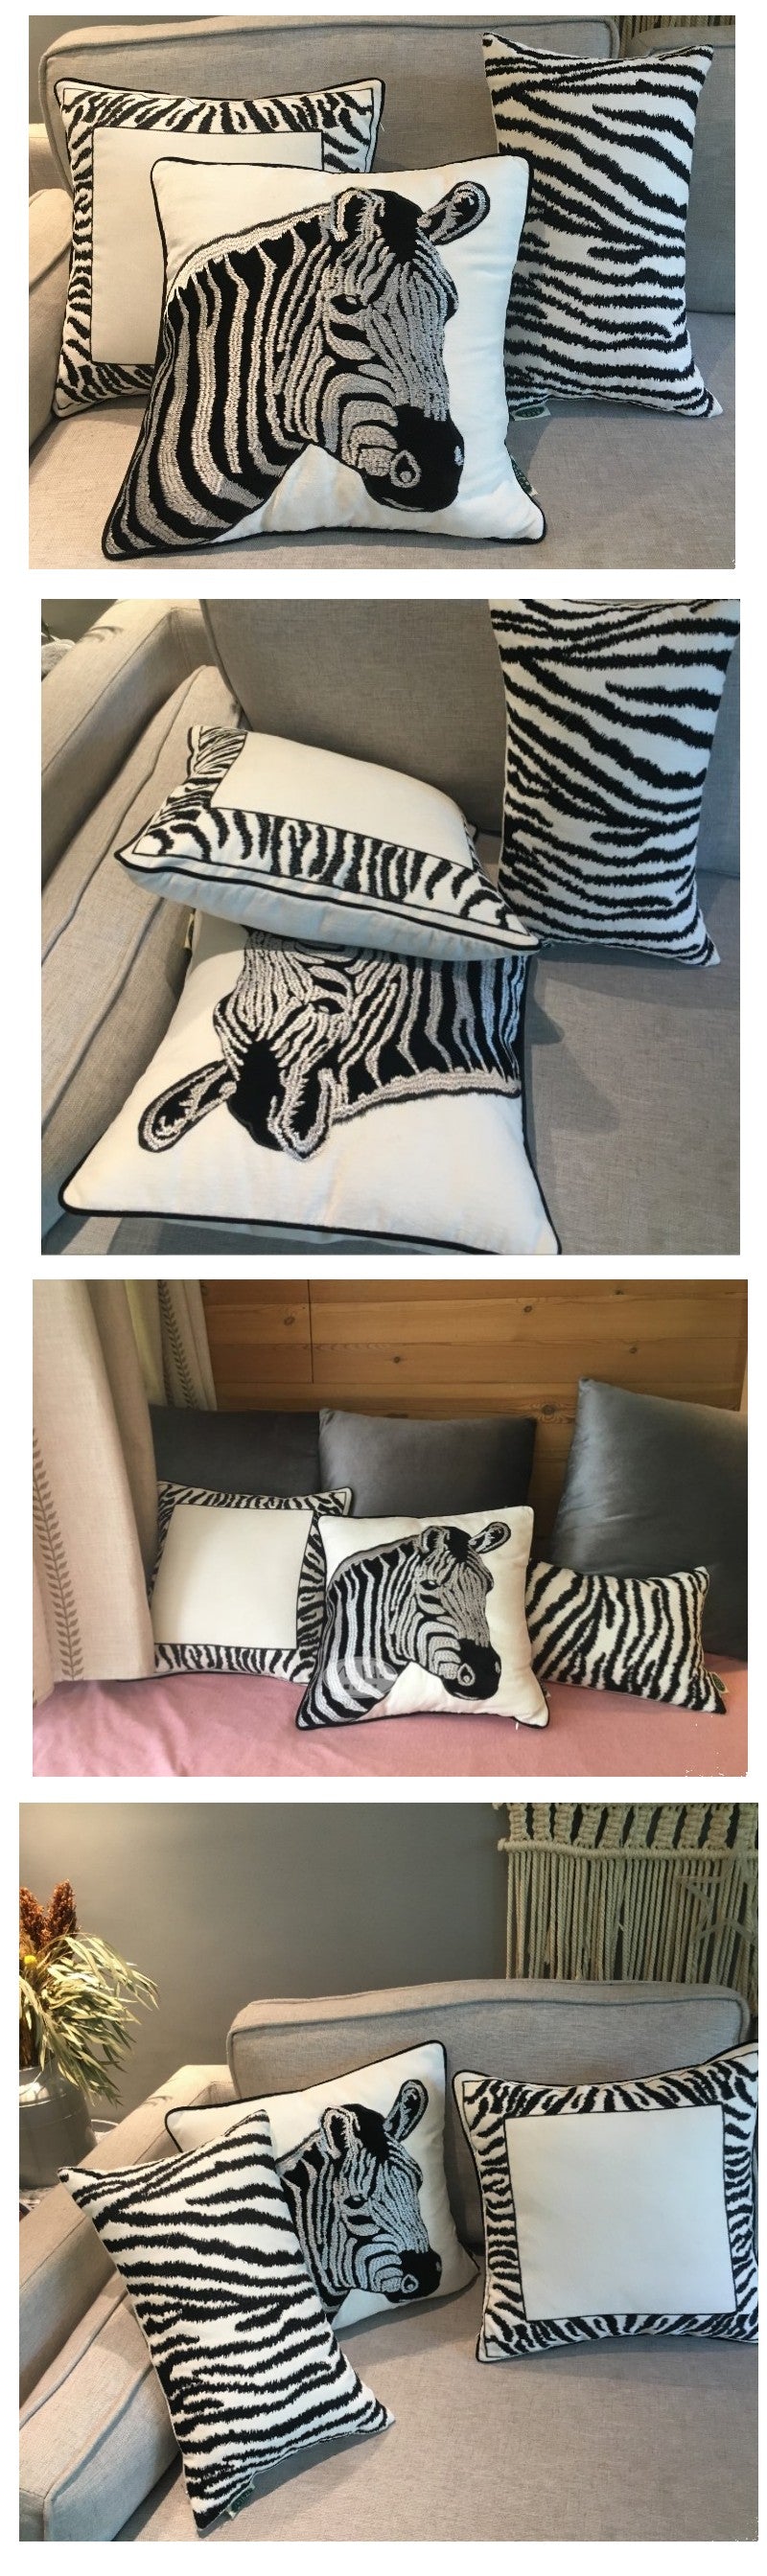 Chenille Zebra Pillow Cover, Decorative Throw Pillow, Sofa Pillows, Home Decoration